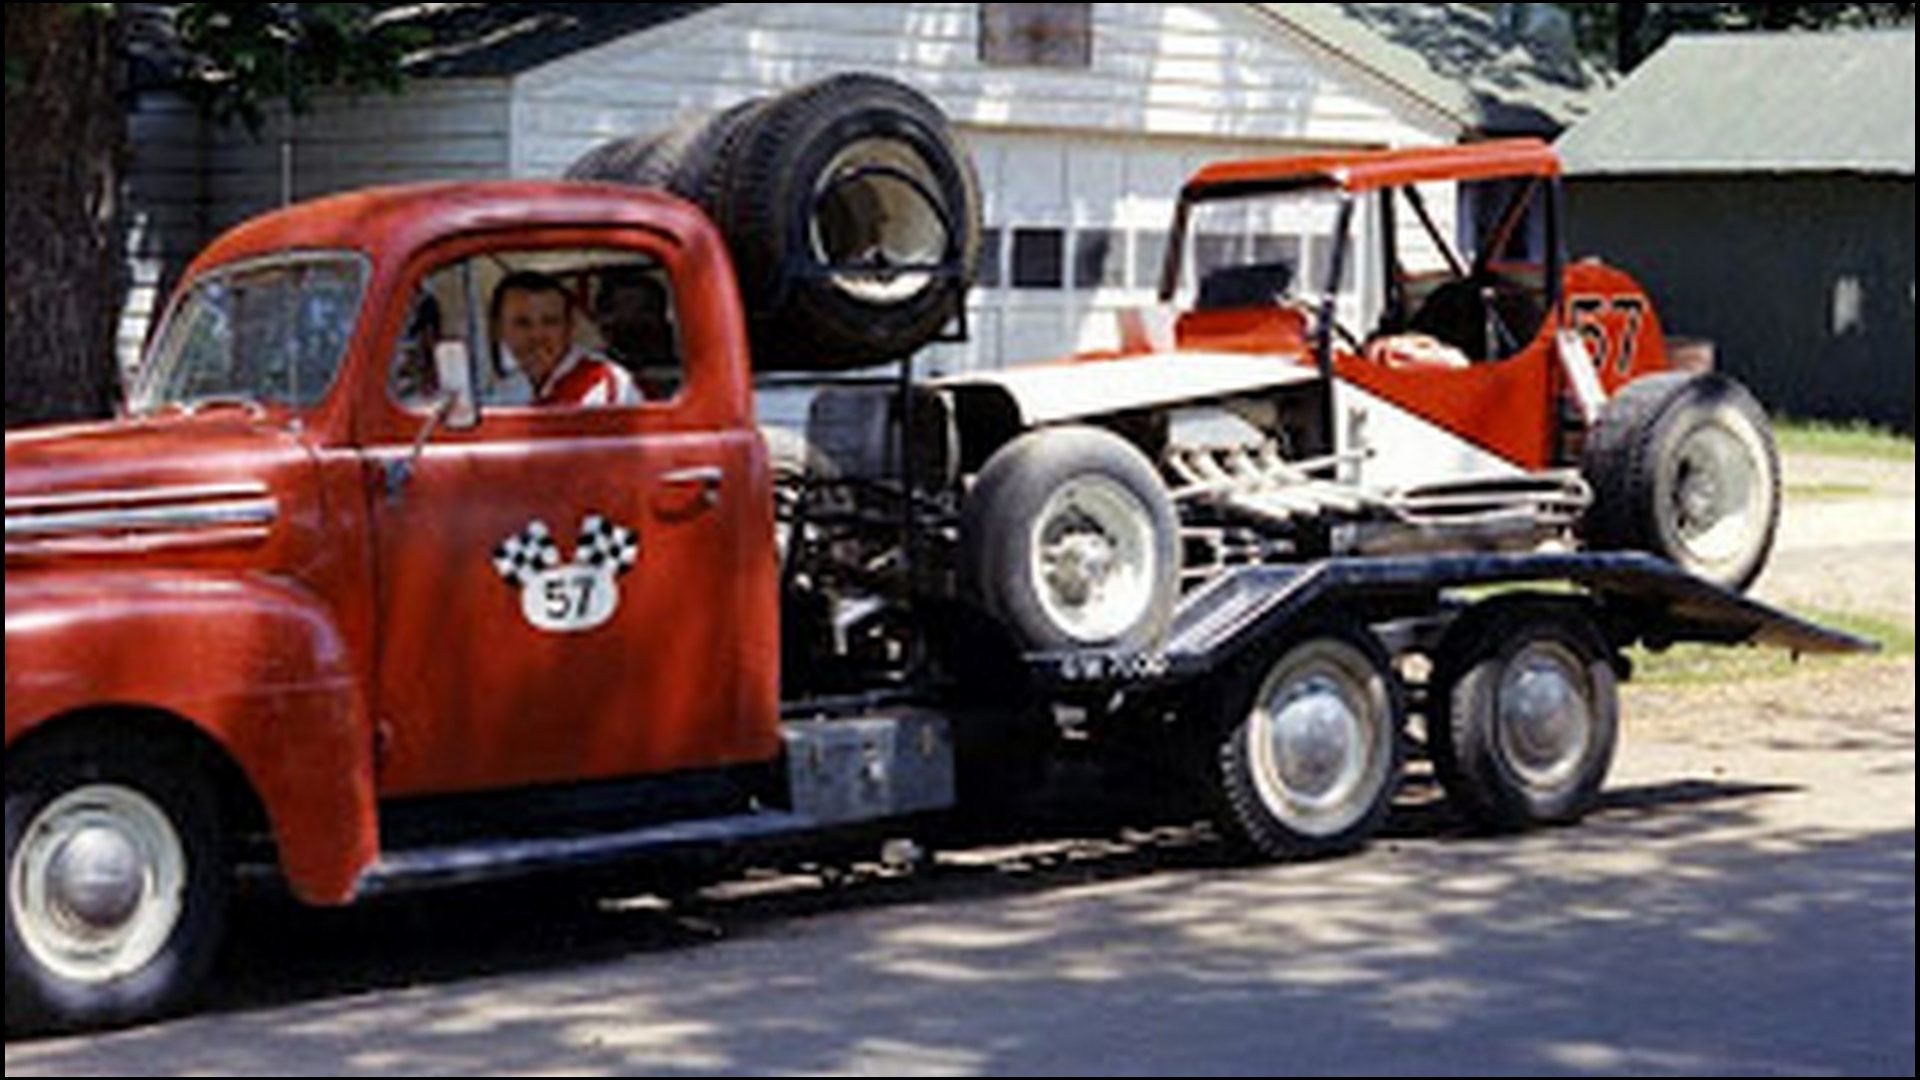 Barry in truck & race car on hauler